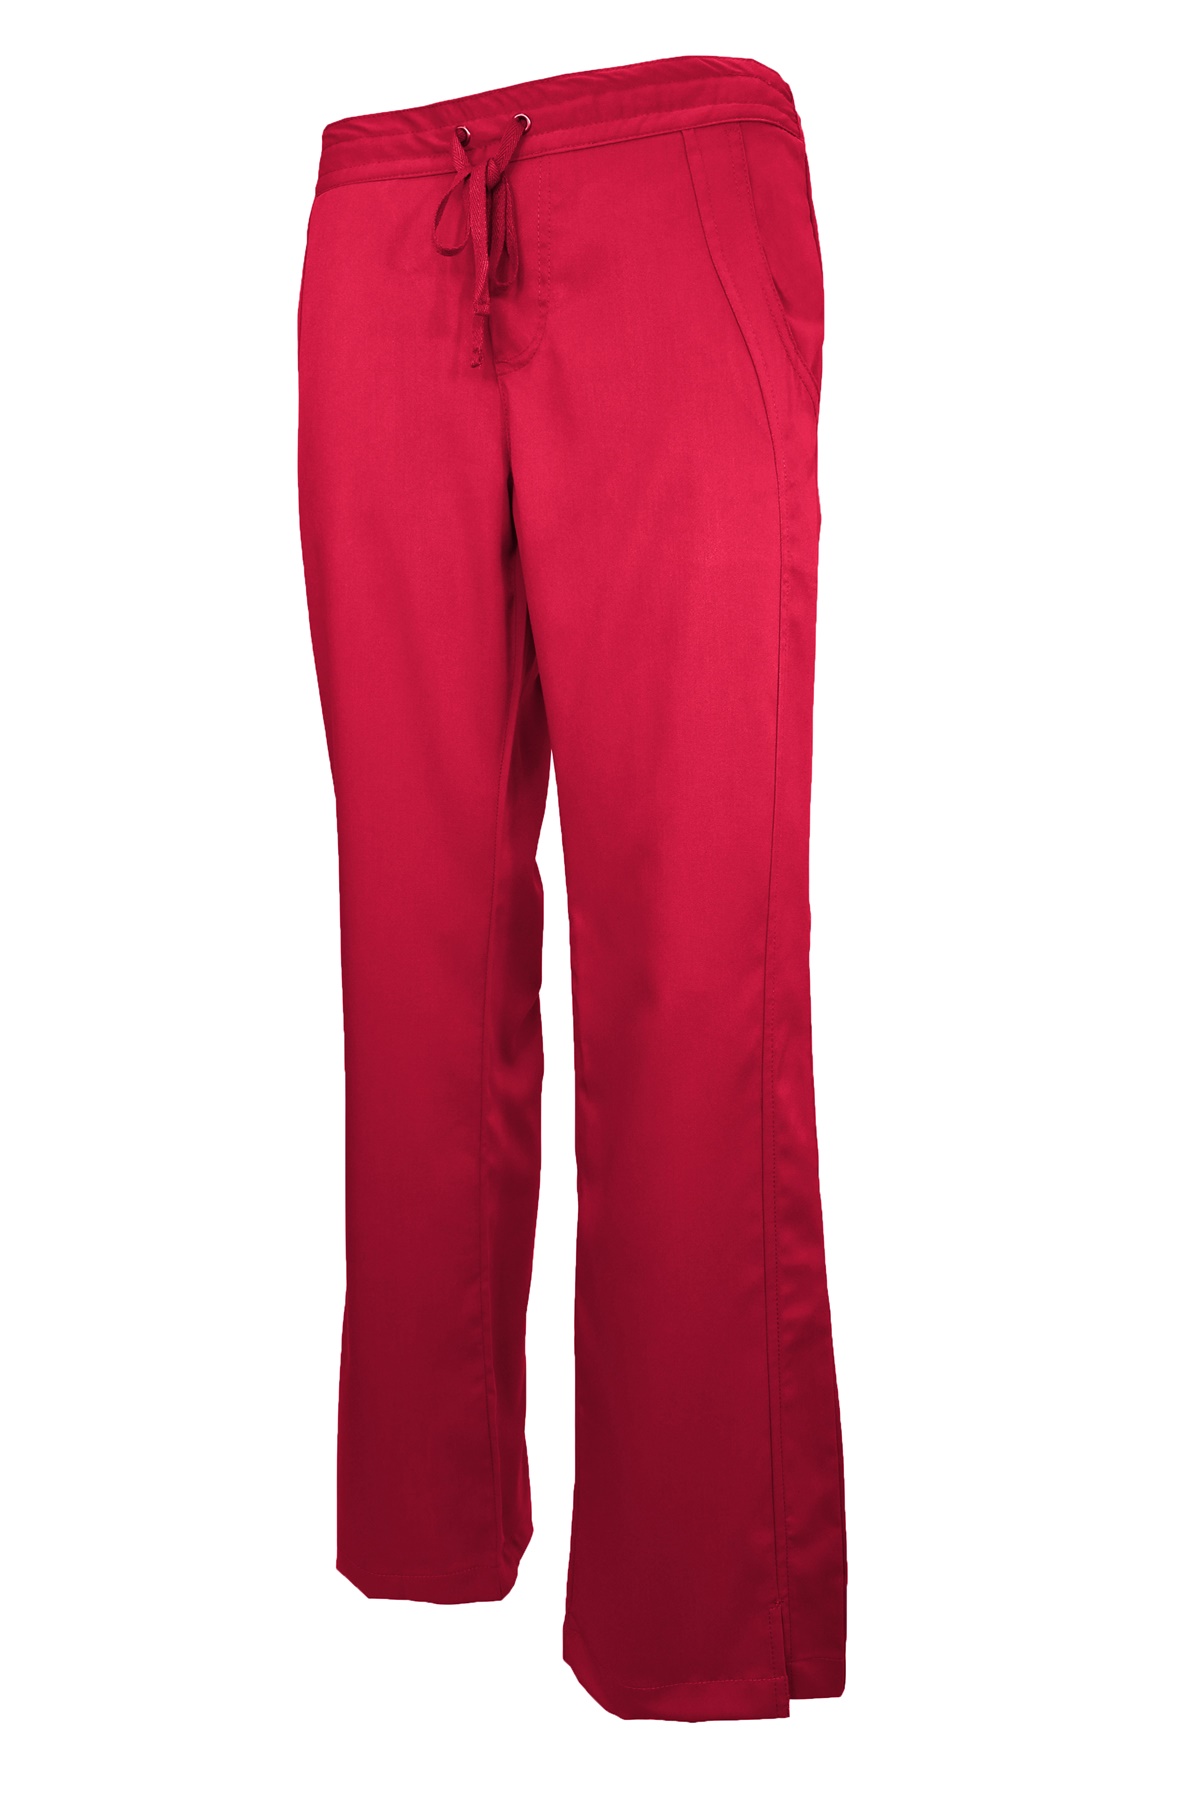 Red Drawstring Scrub Pant 2 Pocket - Natural Uniforms